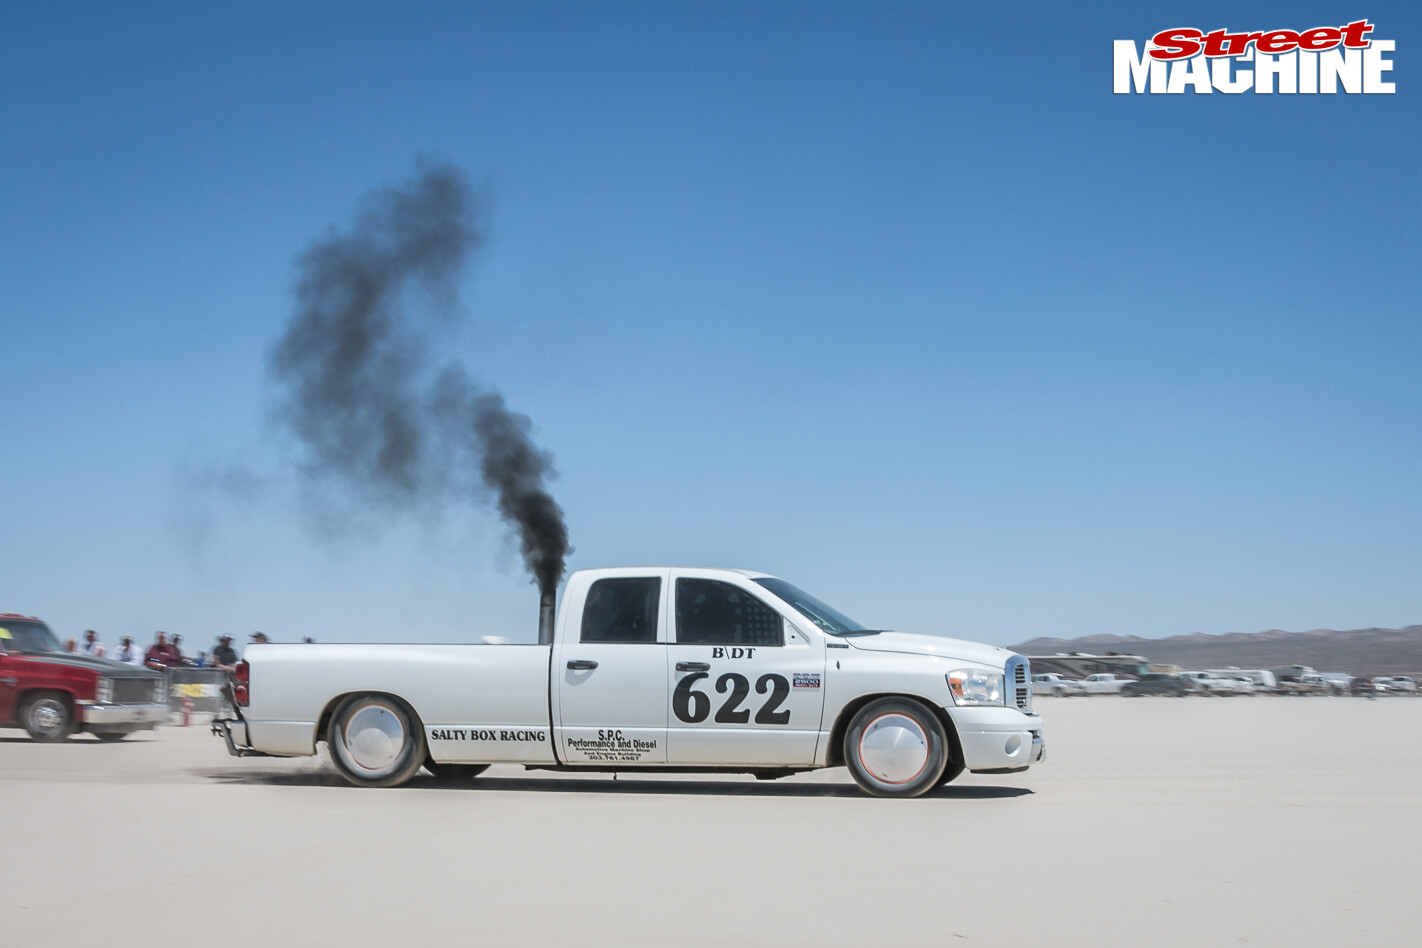 Dodge -Ram -El -Mirage -Salty -Box -Racing -0641